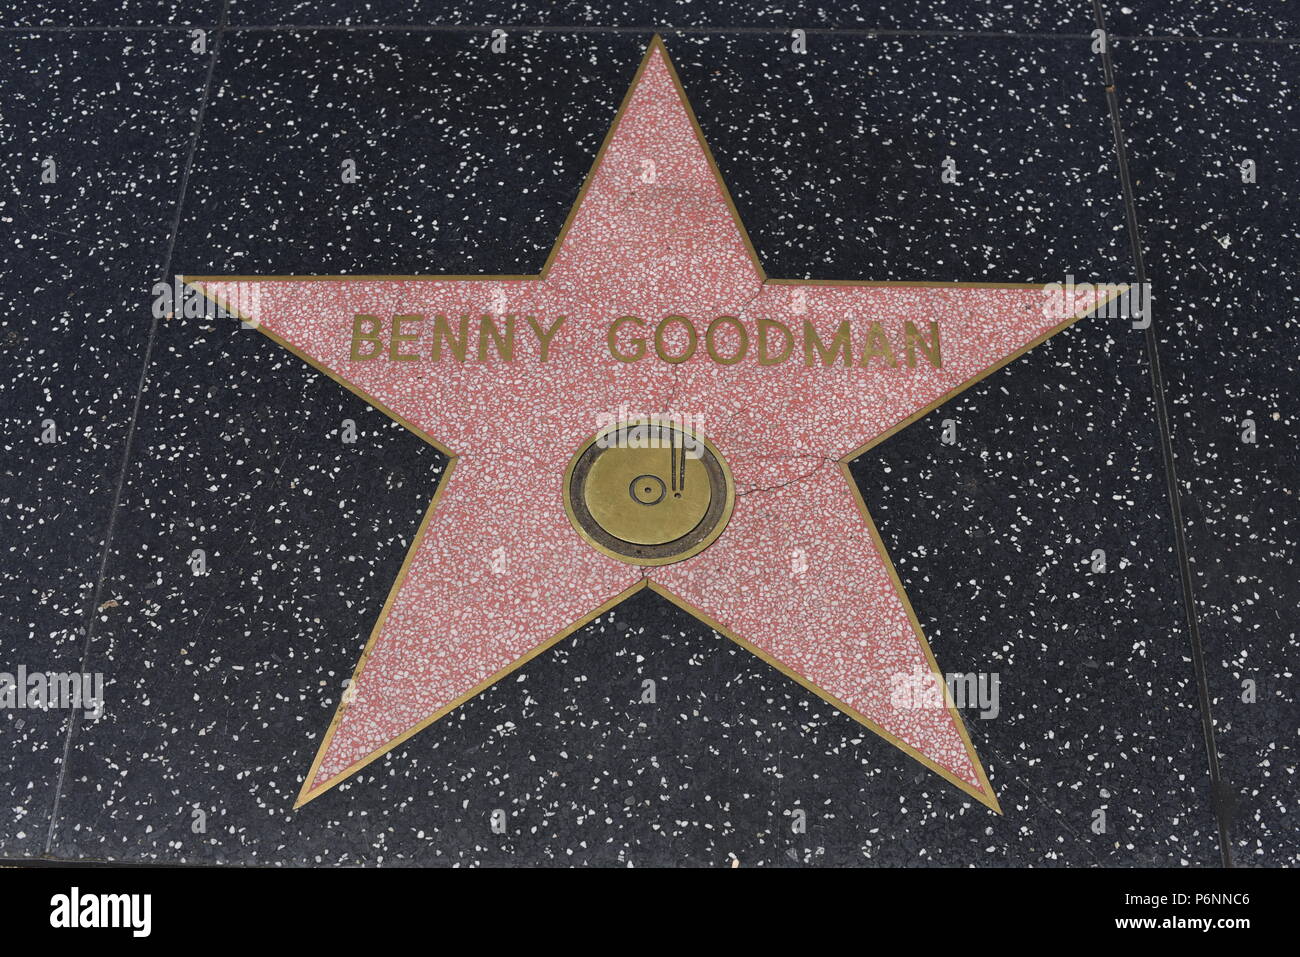 HOLLYWOOD, CA - 29 Giugno: Benny Goodman stella sulla Hollywood Walk of Fame in Hollywood, la California il 29 giugno 2018. Foto Stock